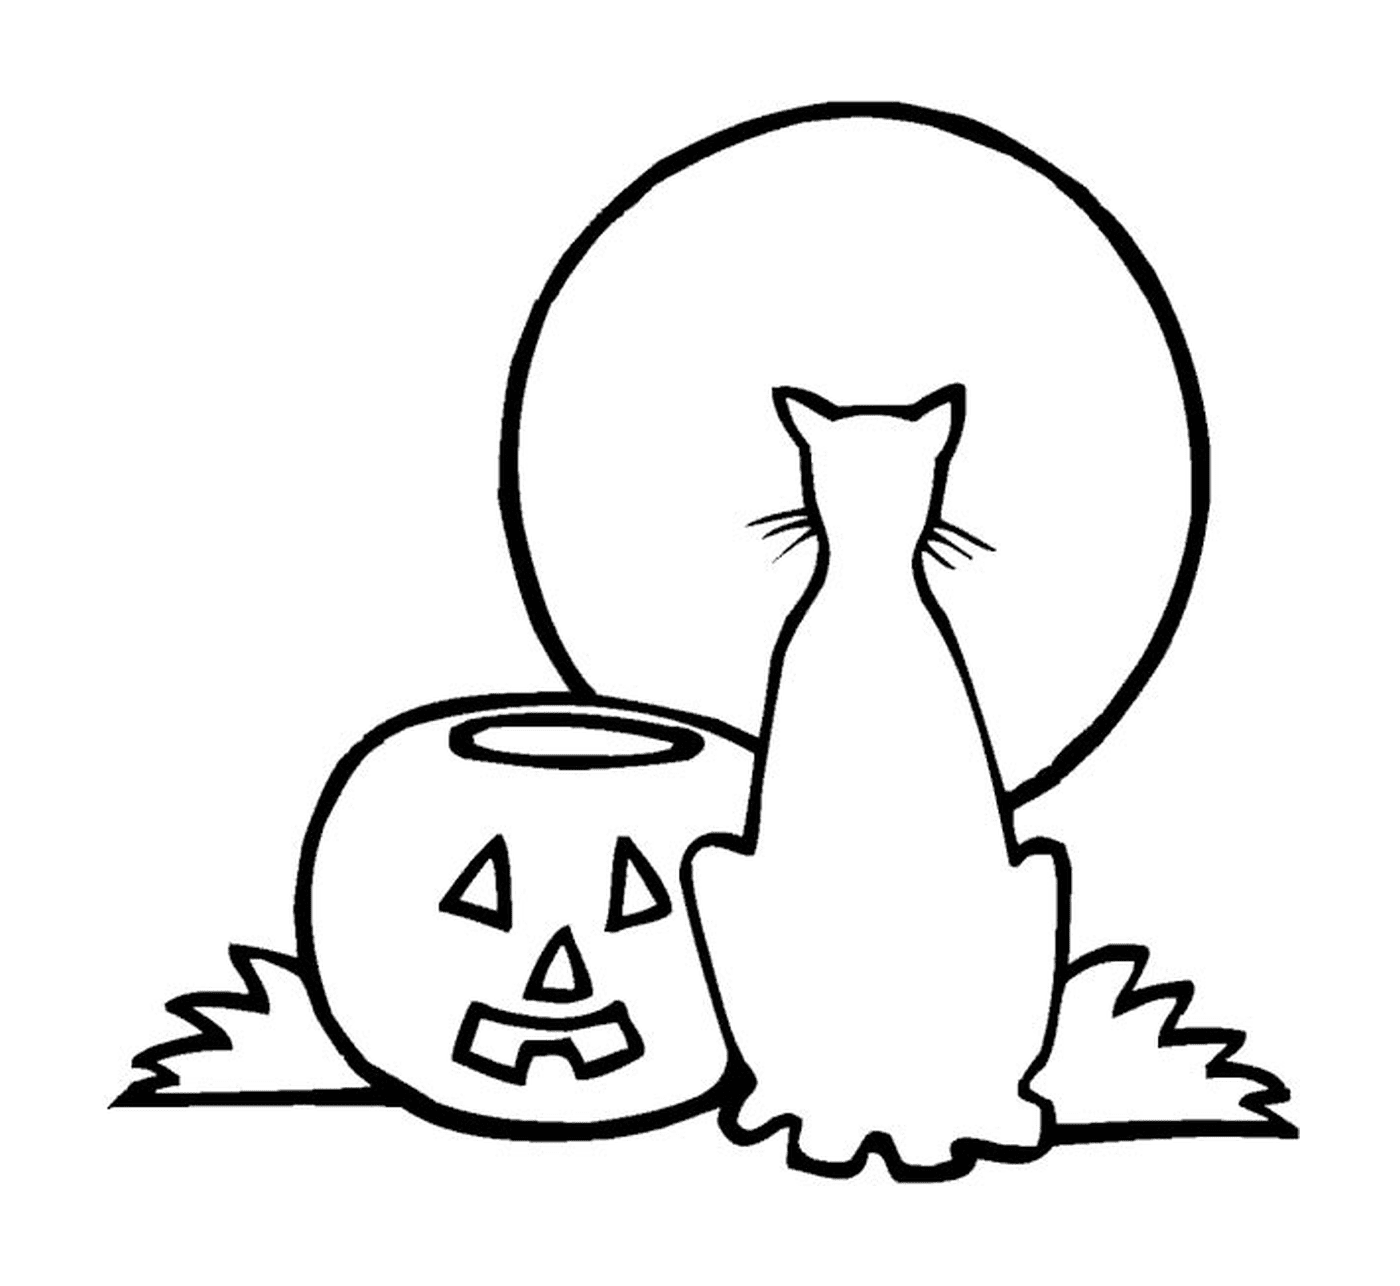  A cat and a pumpkin for Halloween 